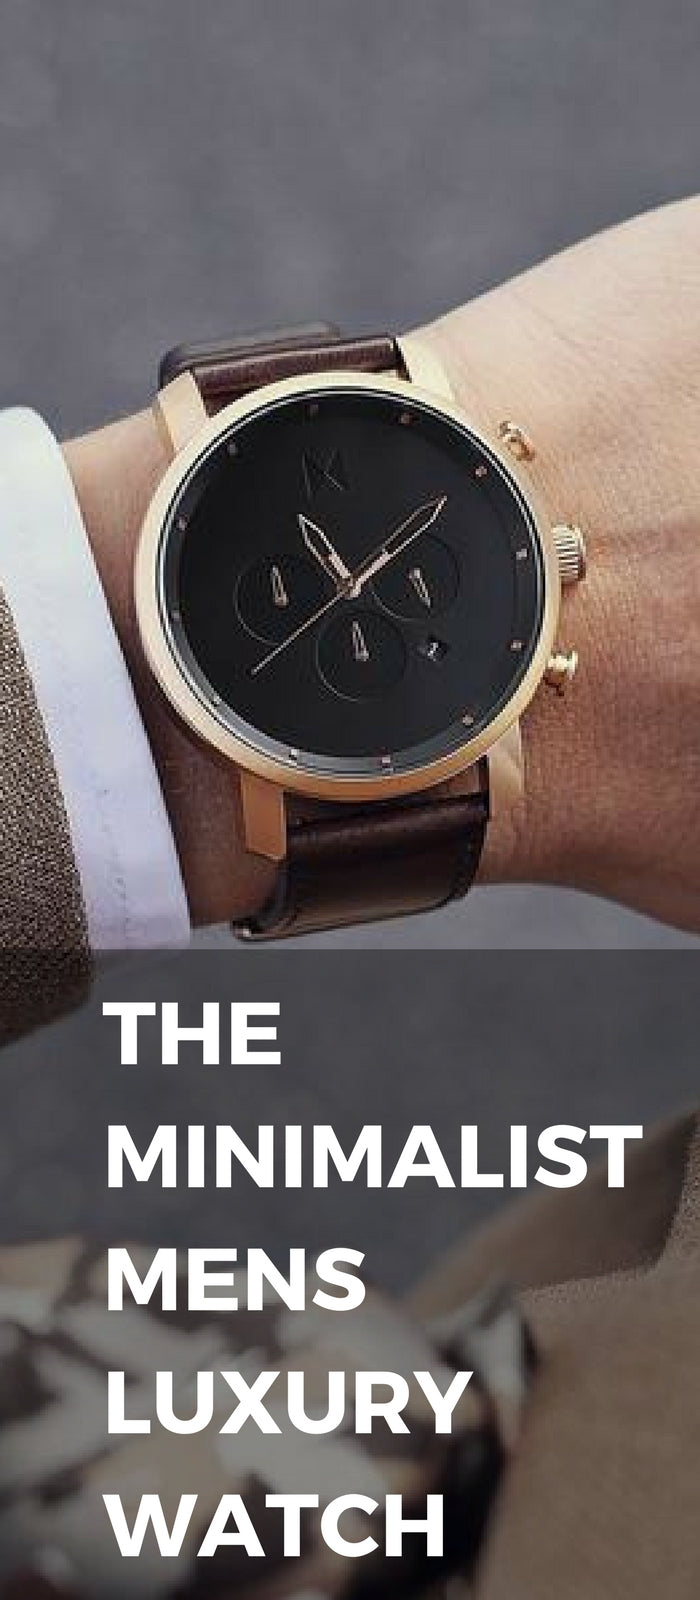 Men's luxury watch 